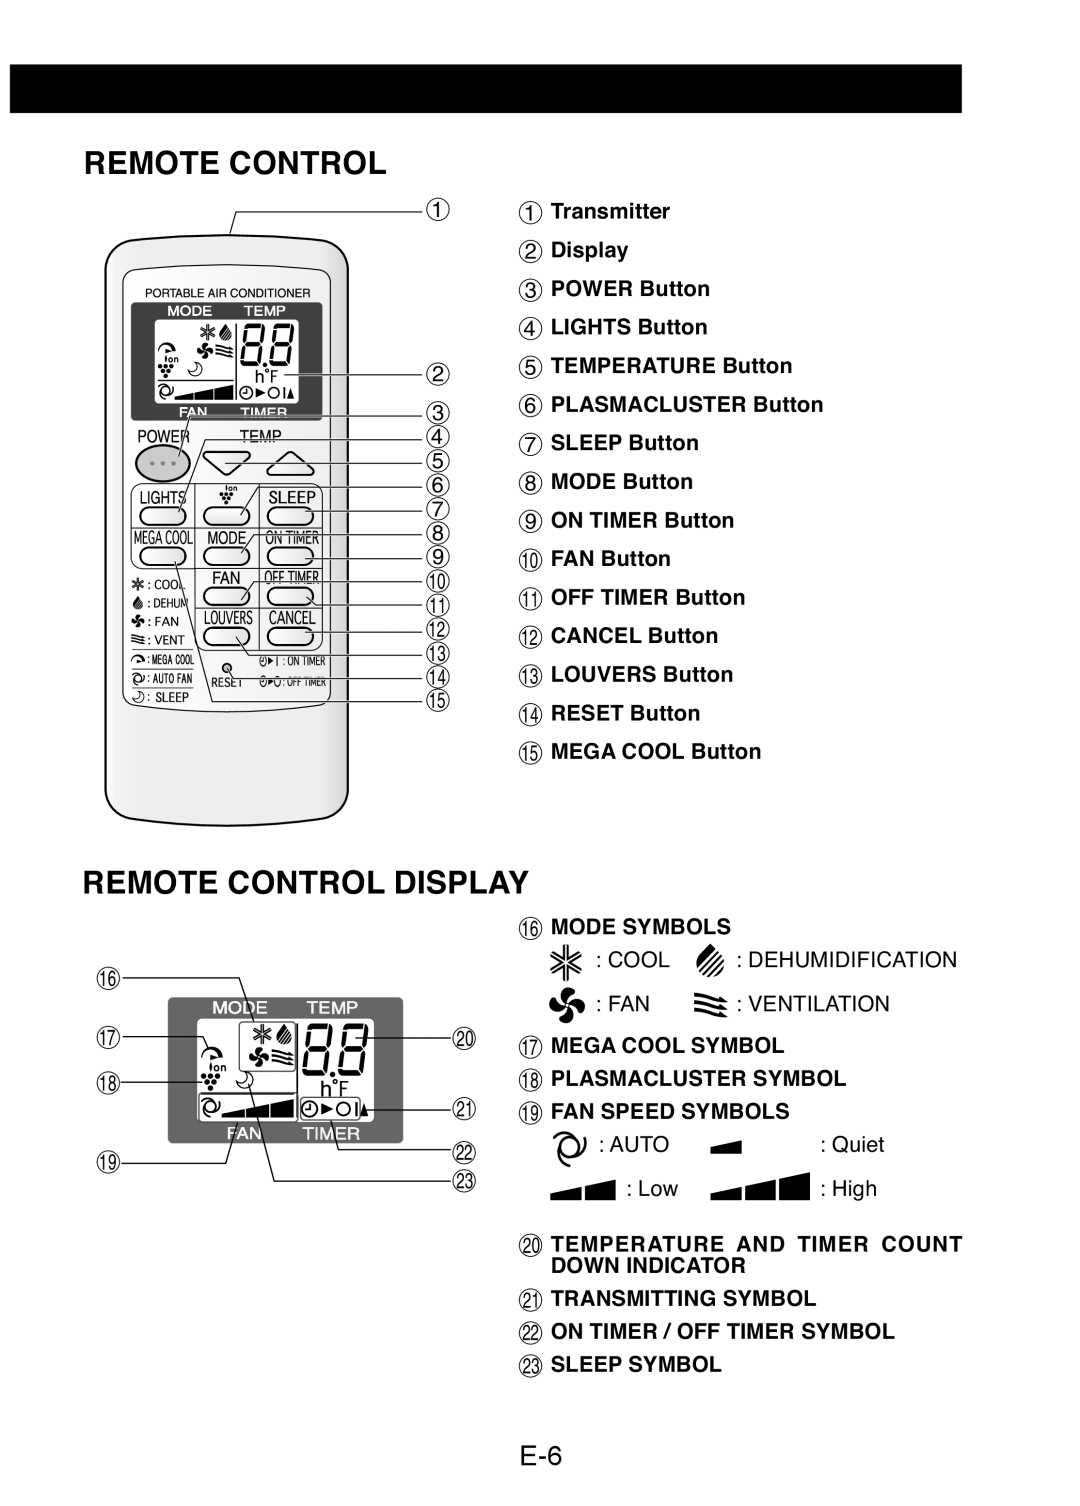 Sharp CV-P10LJ Remote Control Display, 1 1 Transmitter 2 Display 3 POWER Button, LIGHTS Button, TEMPERATURE Button 